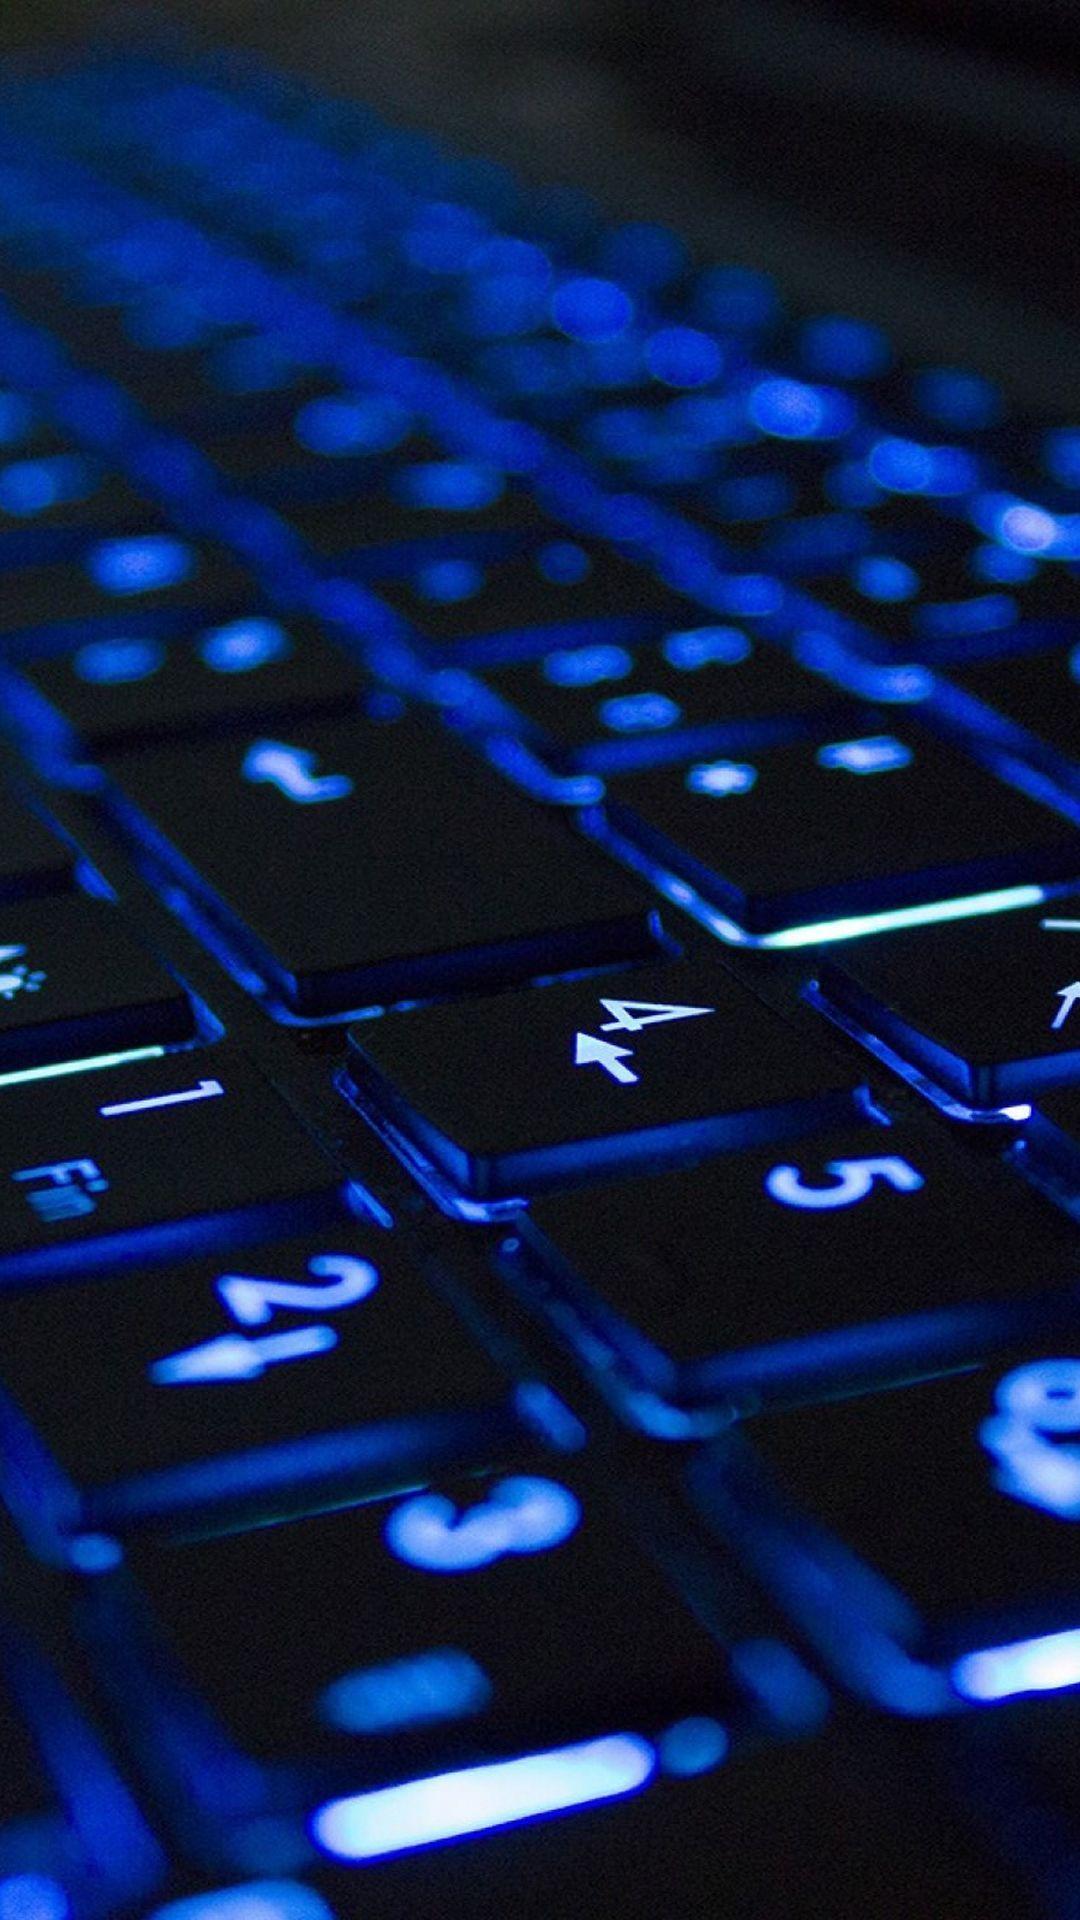 Blue Neon Illuminated Computer Keyboard iPhone 6 Wallpaper